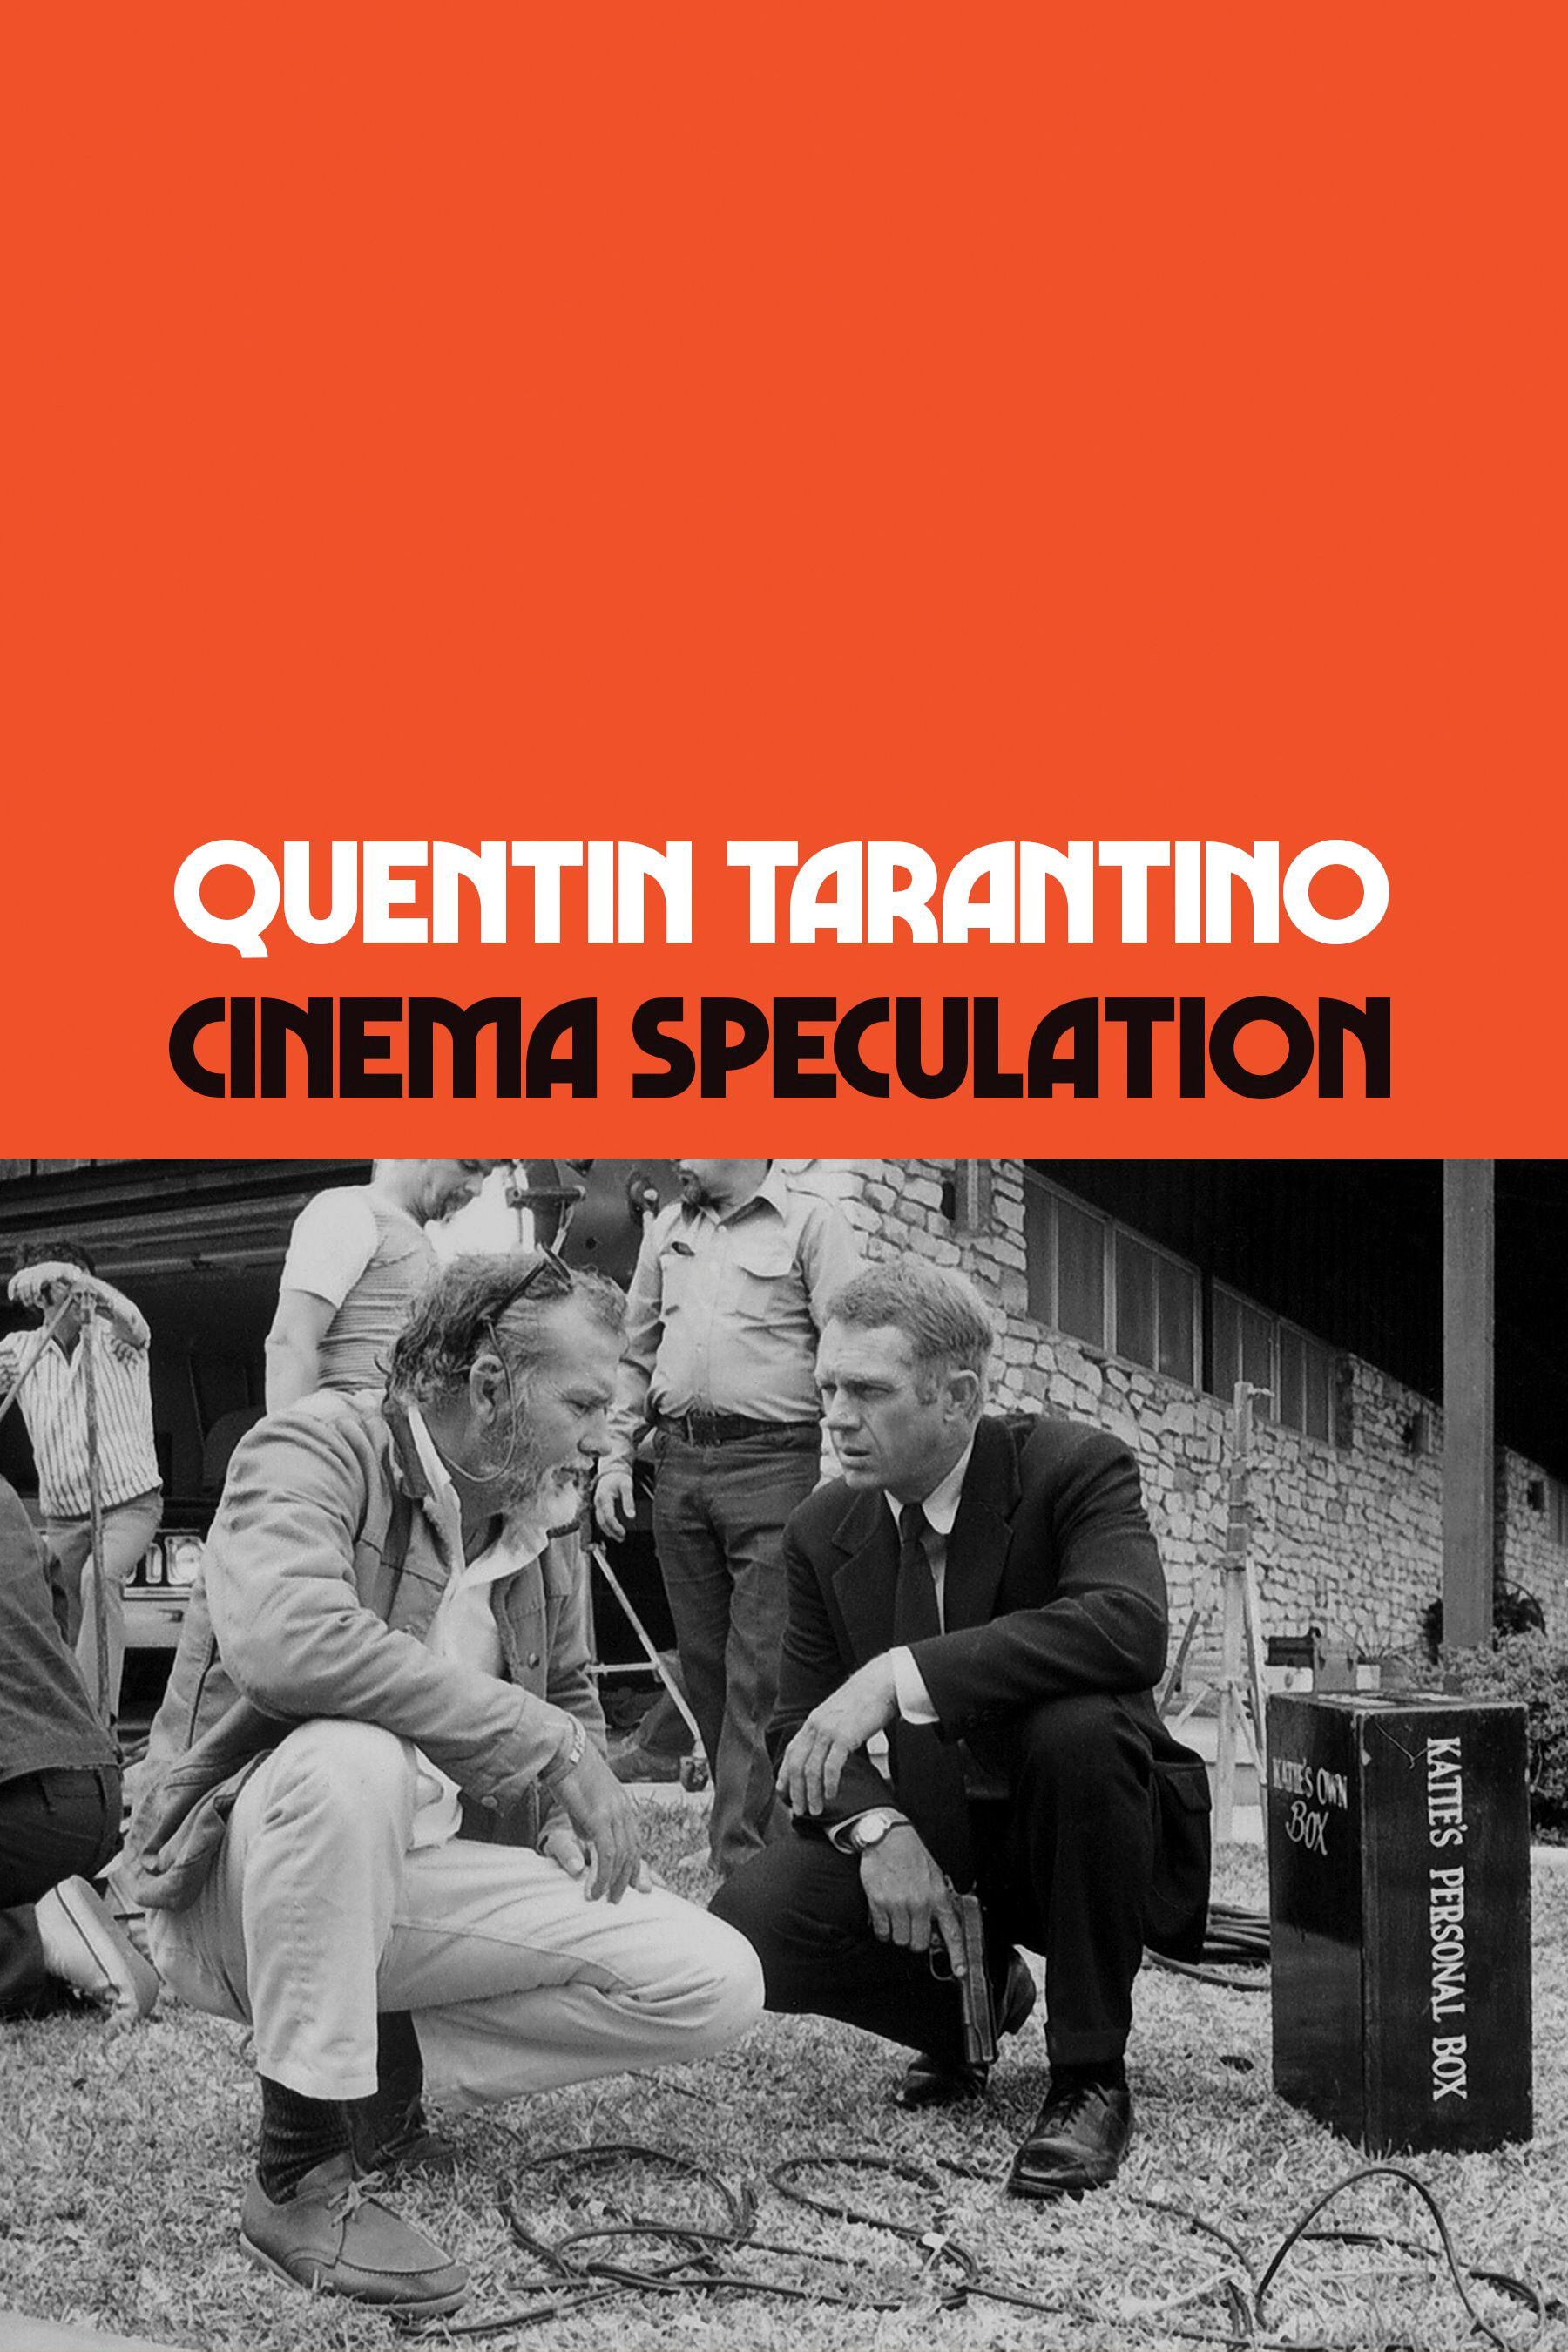 Quentin Tarantino book ‘Cinema Speculation’ to land Oct. 25